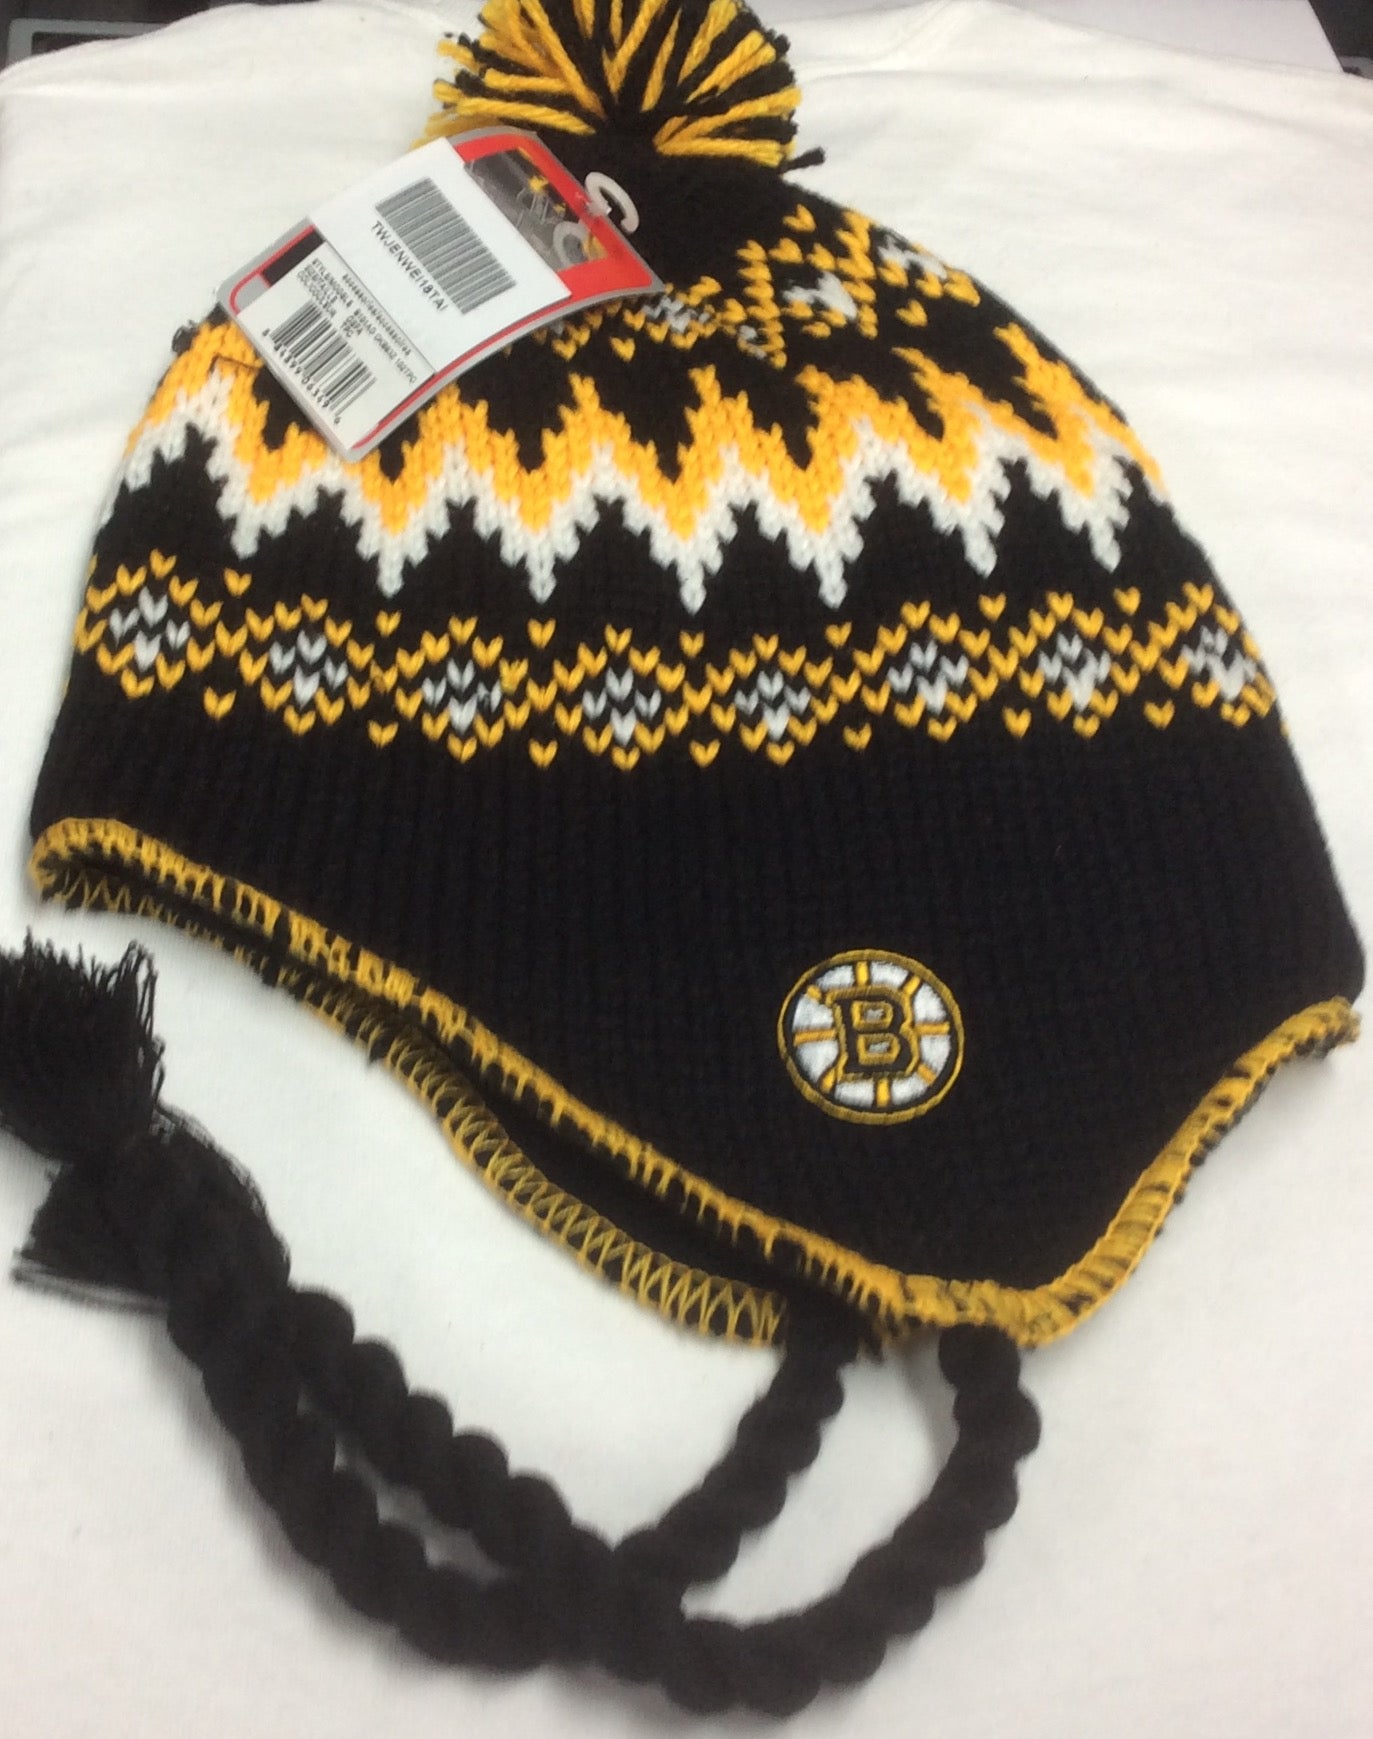 Reebok, Accessories, Boston Bruins Hat